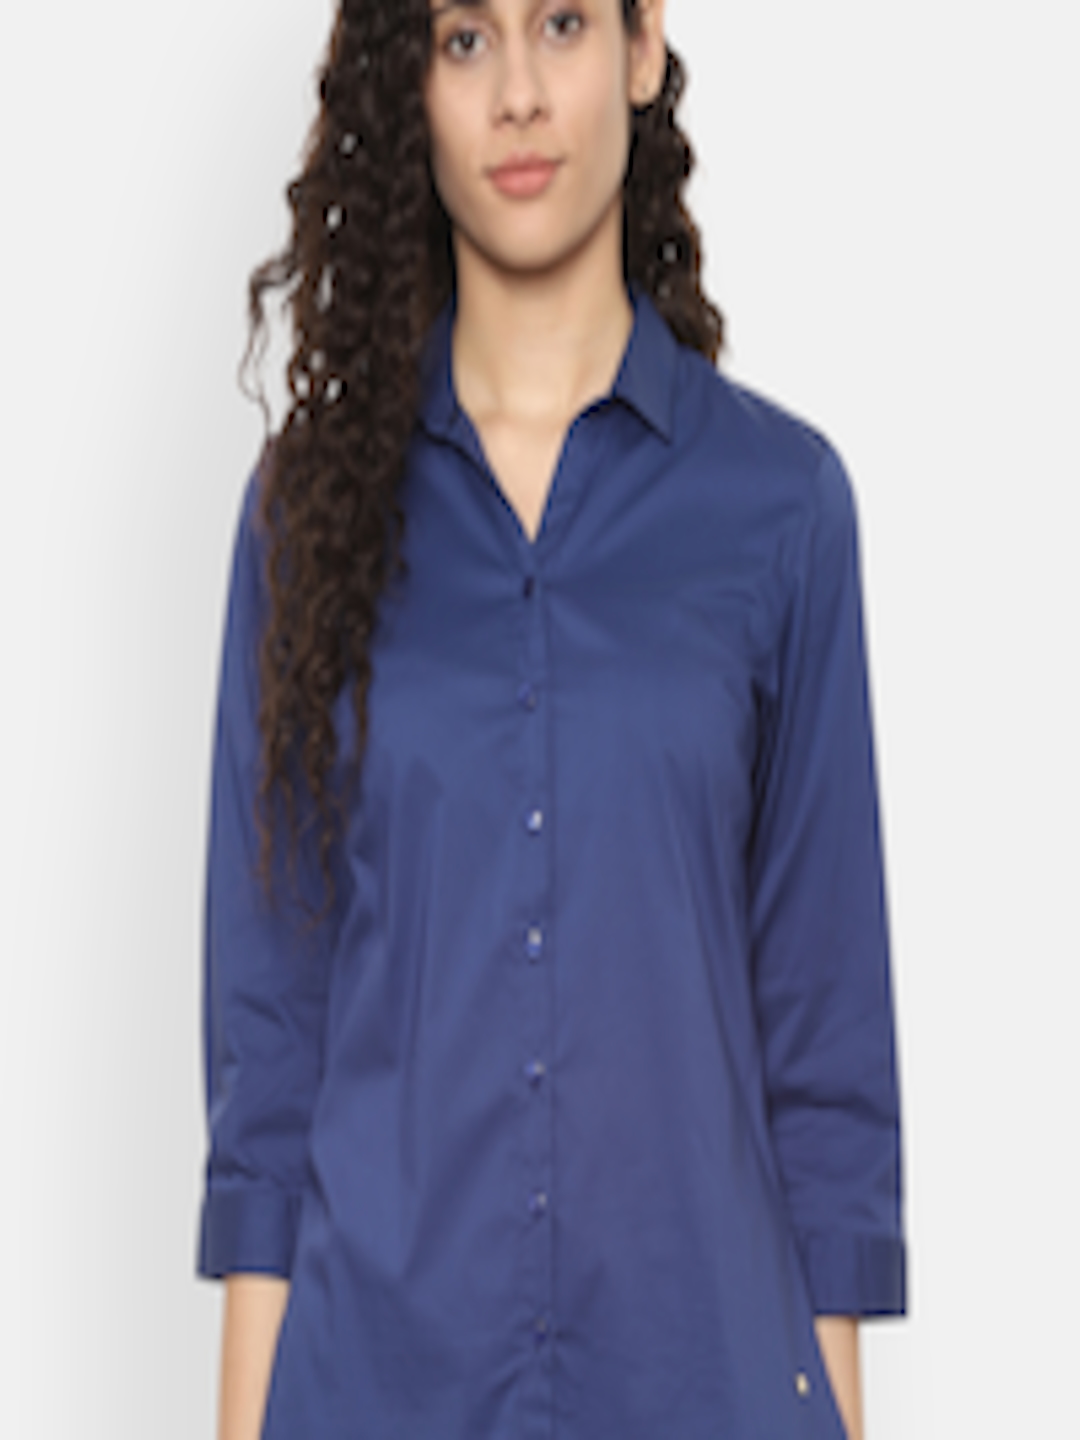 Buy Allen Solly Woman Women Navy Blue Regular Fit Solid Formal Shirt ...